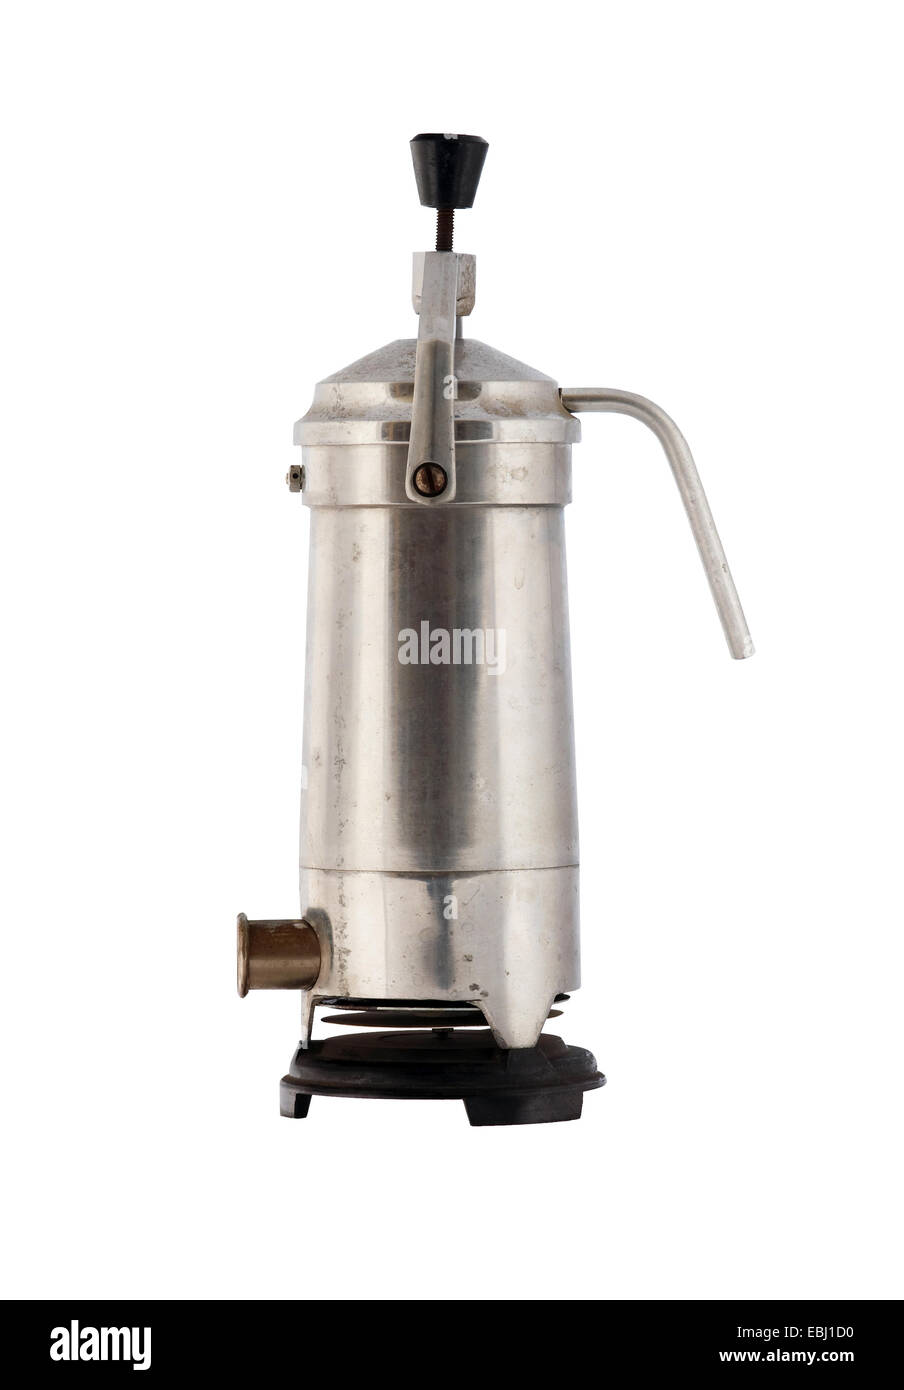 https://c8.alamy.com/comp/EBJ1D0/old-coffee-maker-drip-coffee-pot-EBJ1D0.jpg